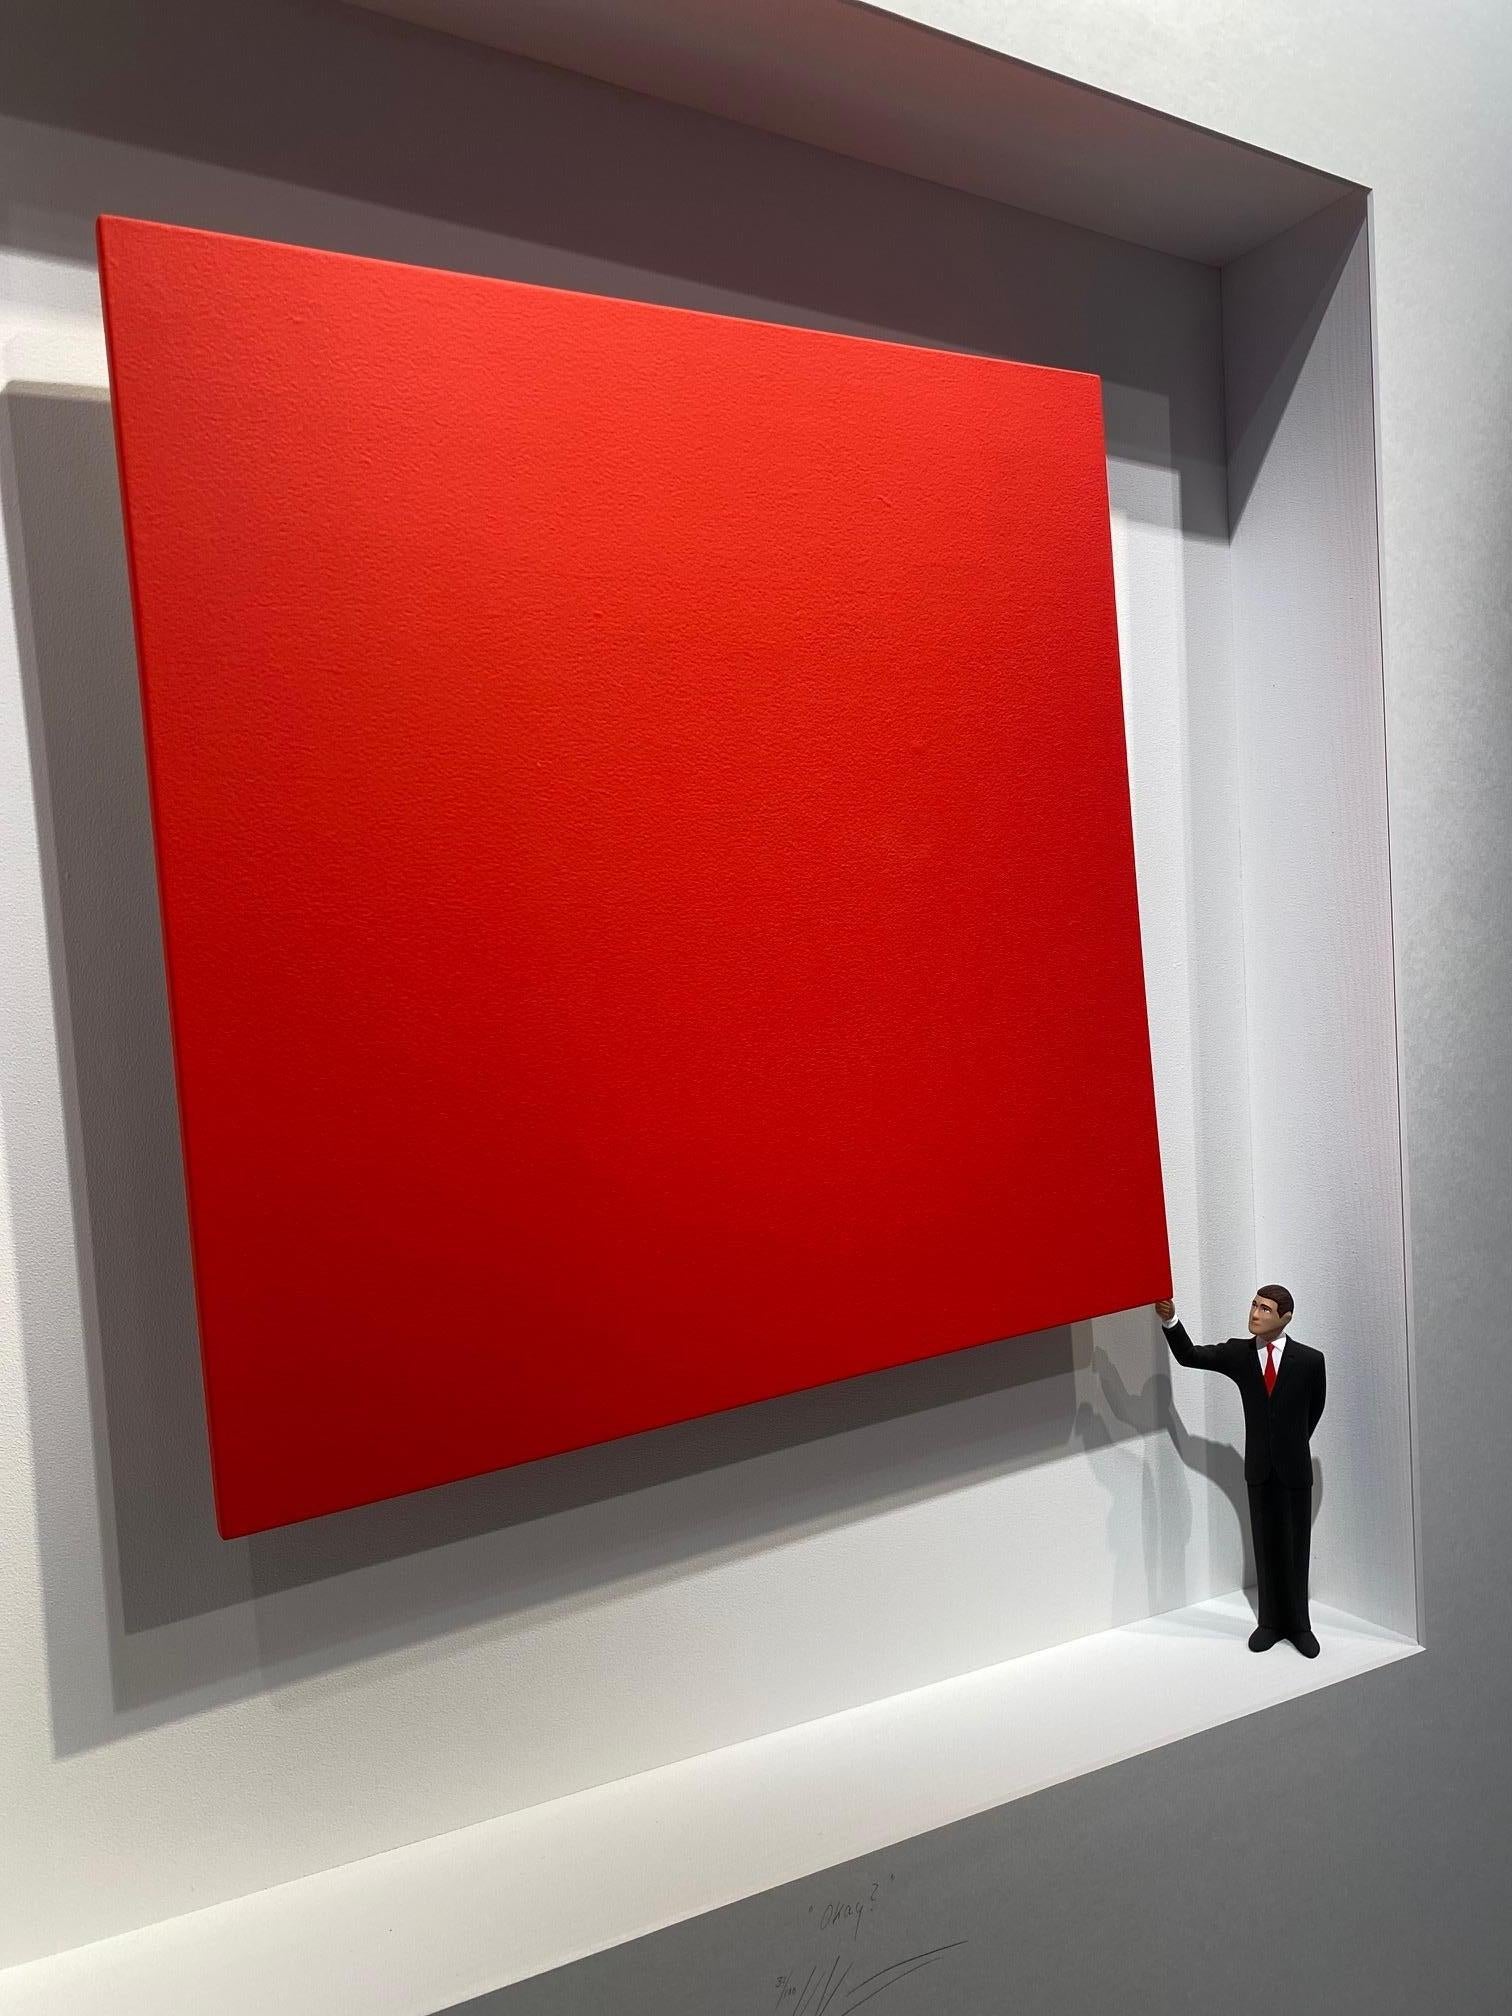 Okay? - mixed media art work, contemporary, minimalist red square constructivist - Assemblage Mixed Media Art by Volker Kuhn